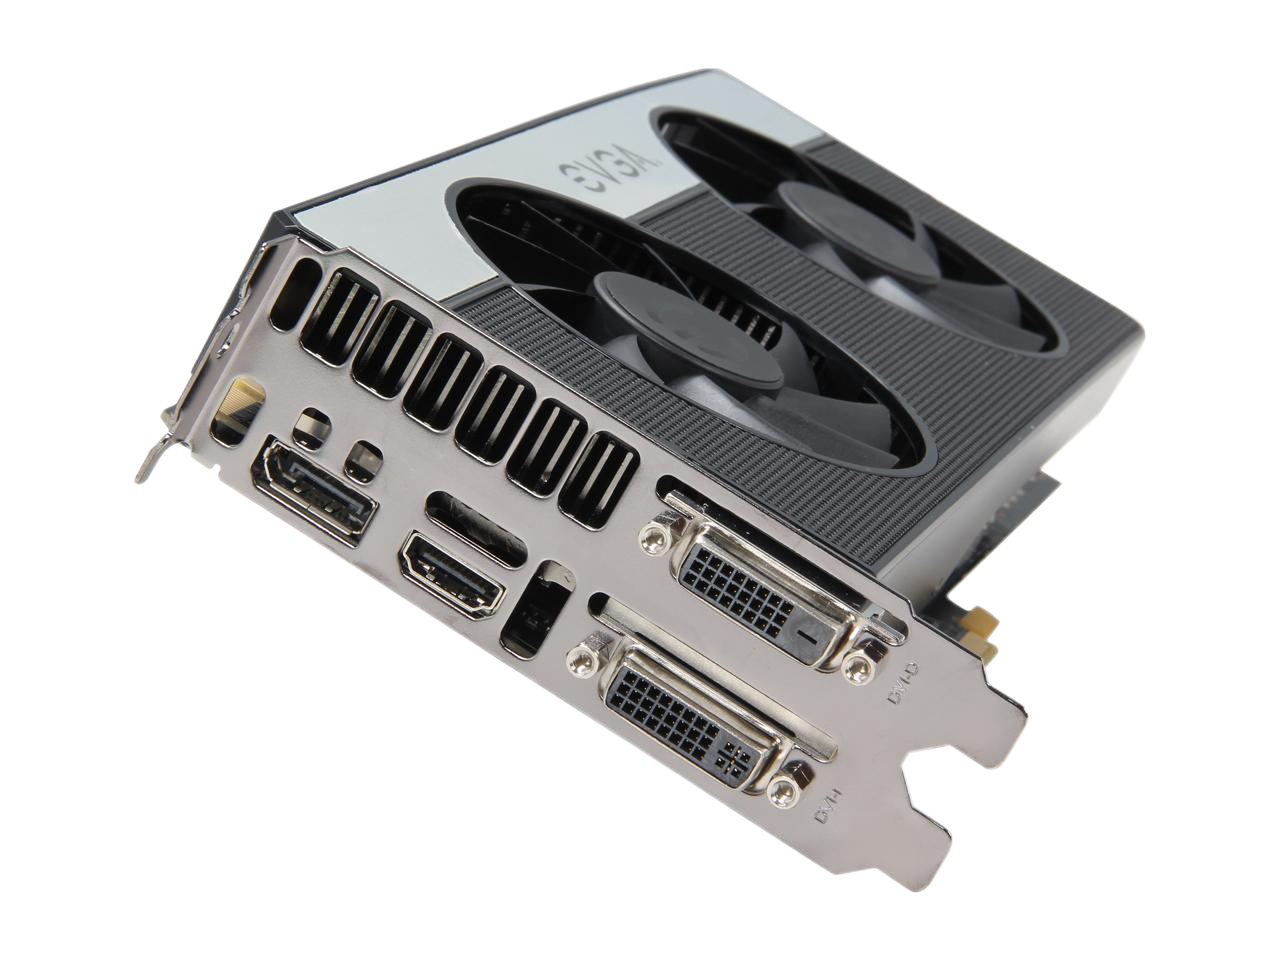 EVGA GeForce GTX 670 FTW Signature2 2GB 256-bit GDDR5 PCI Express 3.0 x16 HDCP Ready SLI Support Video Card 02G-P4-3677-KR